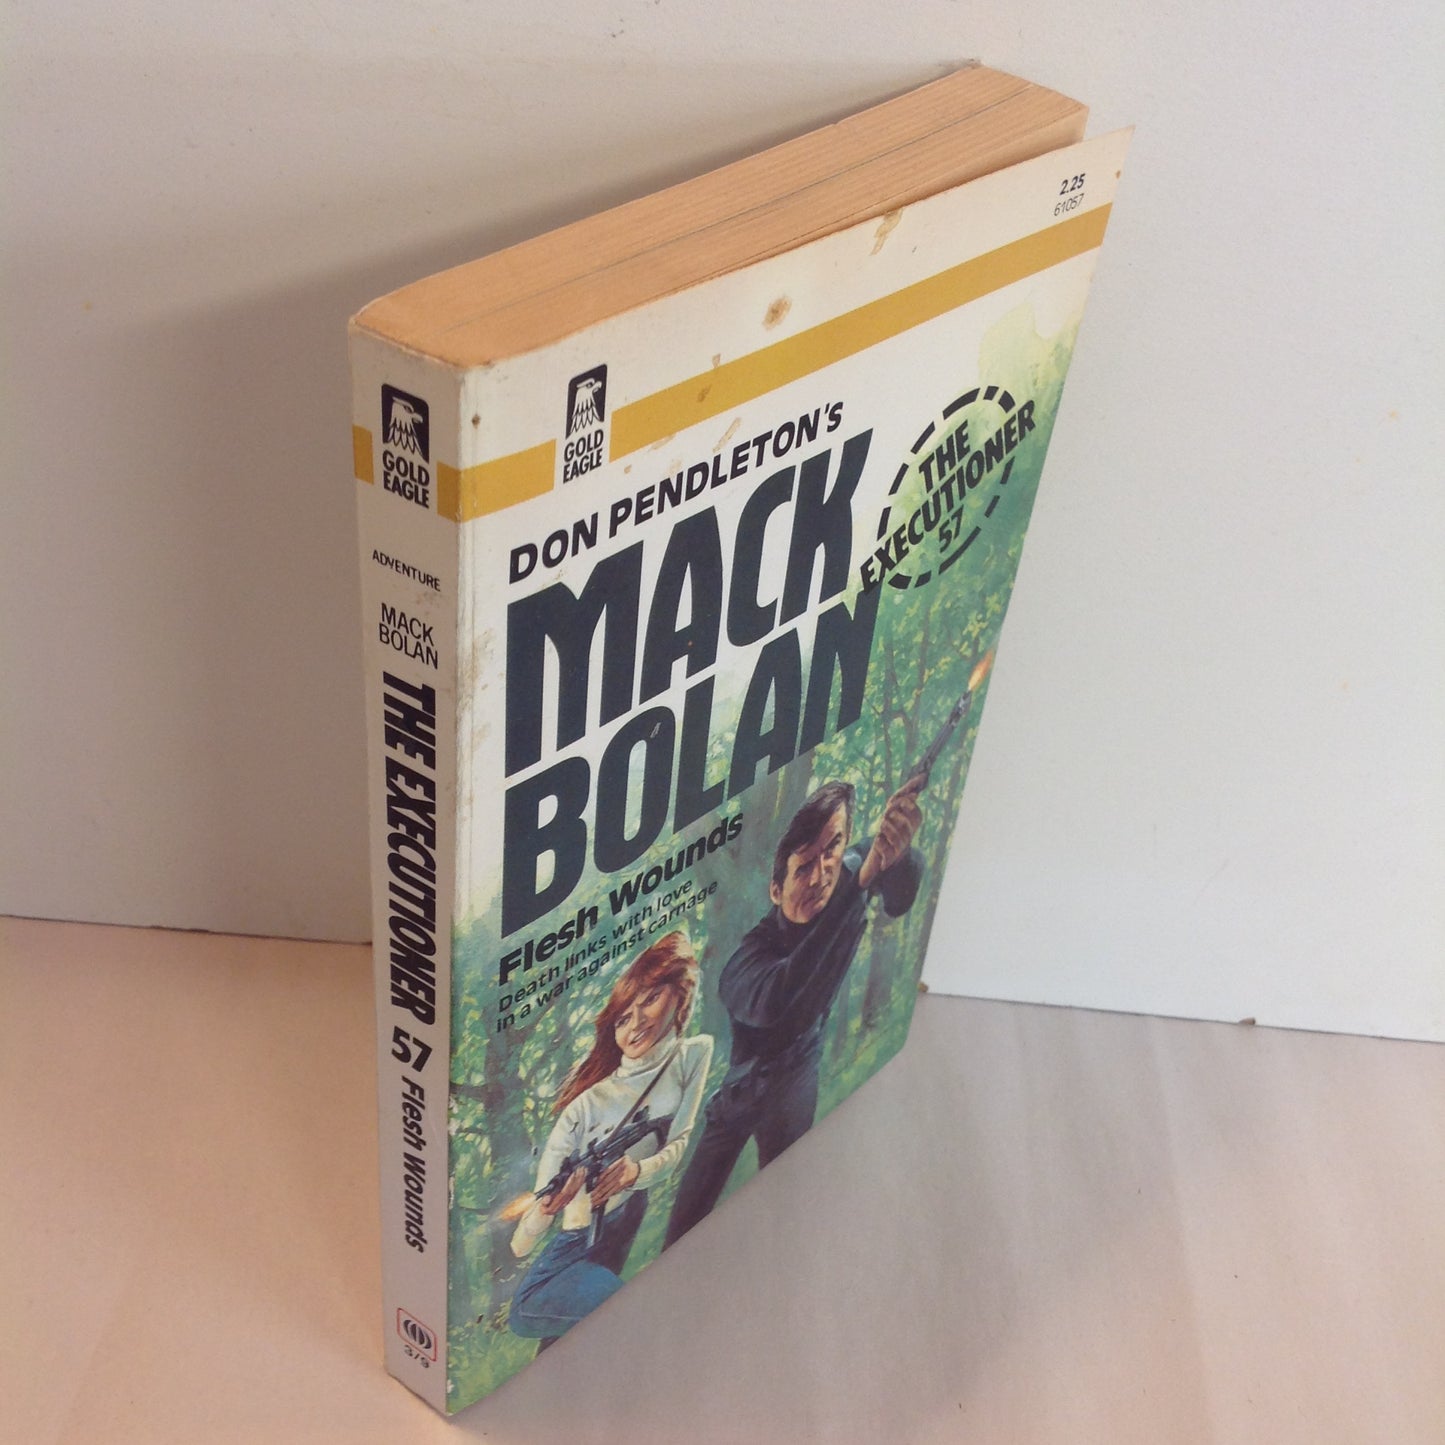 Vintage 1983 Mass Market Paperback Don Pendleton's Mack Bolan The Executioner 57: Flesh Wounds